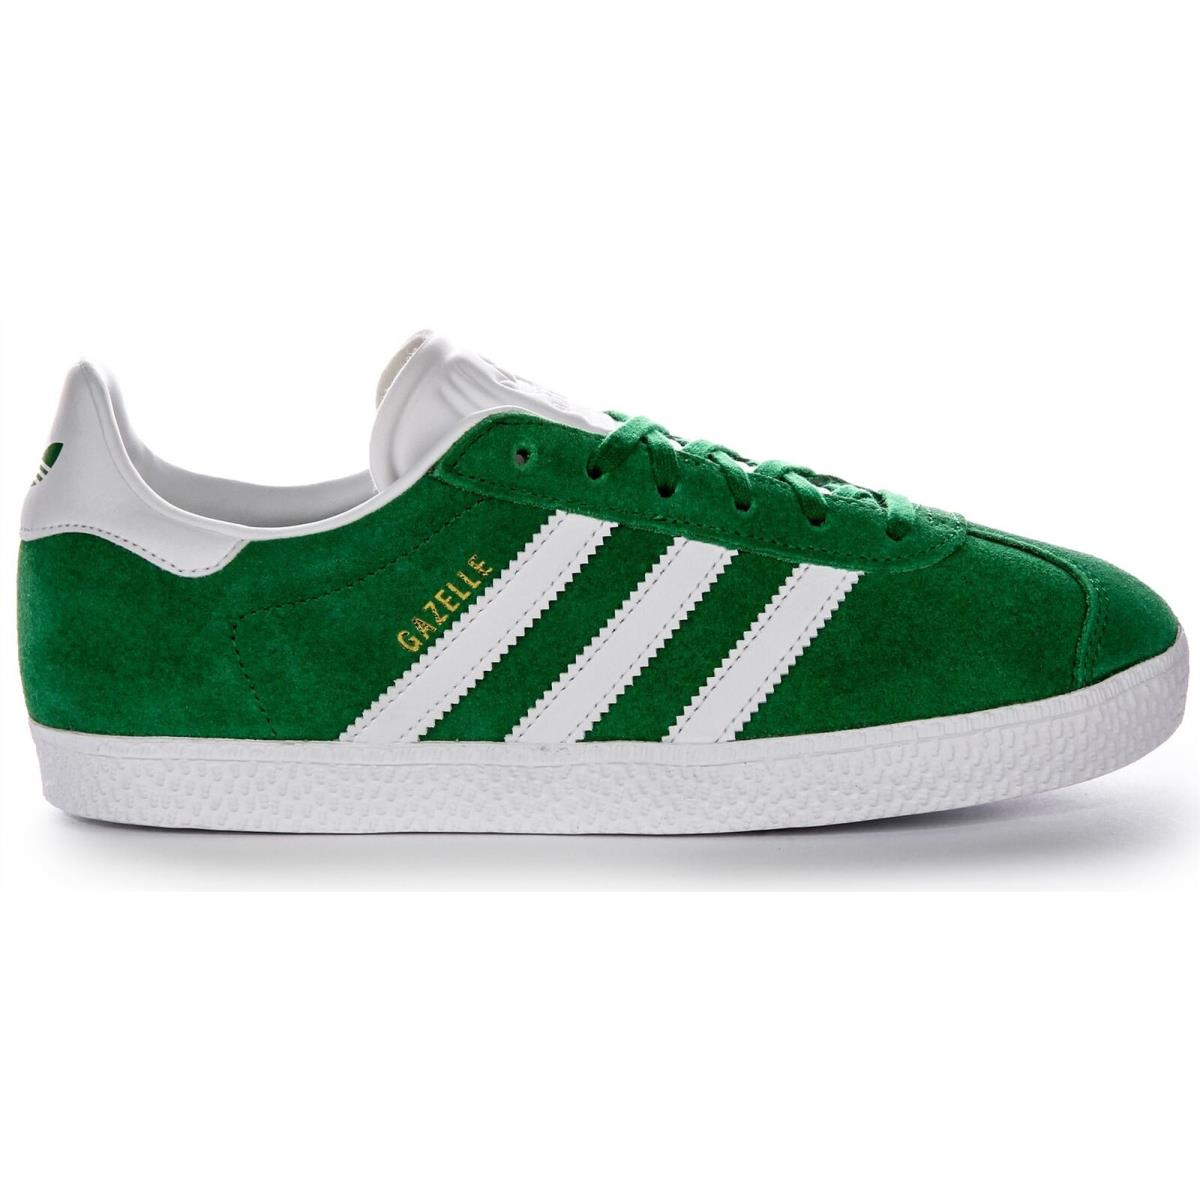 Adidas Gazelle 90s Retro Suede Mens Sneakers Green Juniors US 6 - 13 - GREEN